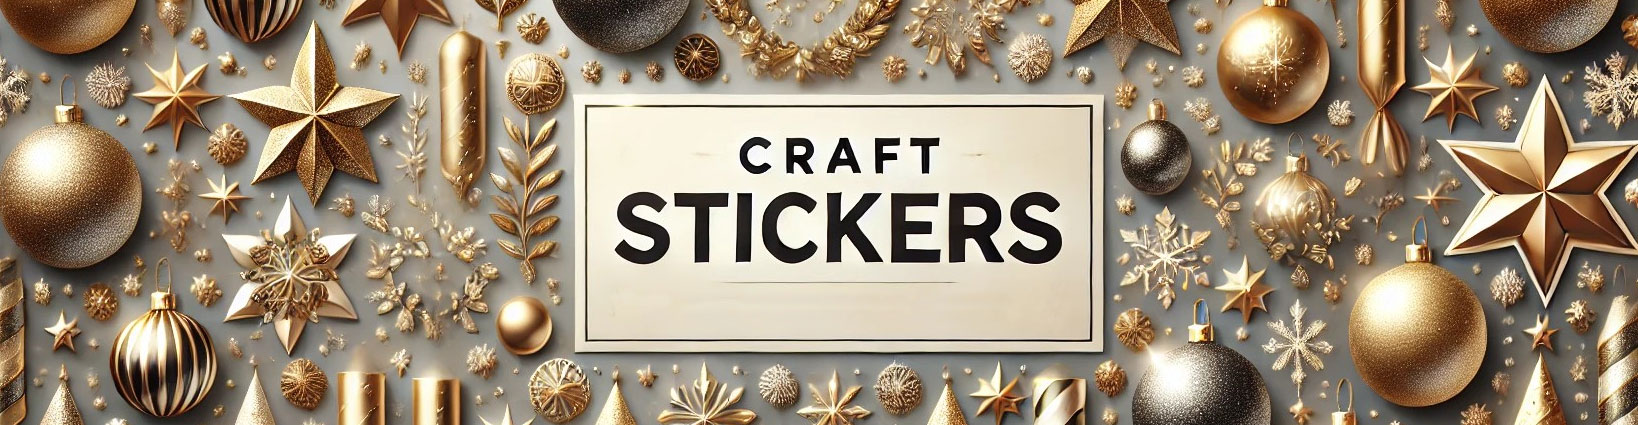 Craft Stickers